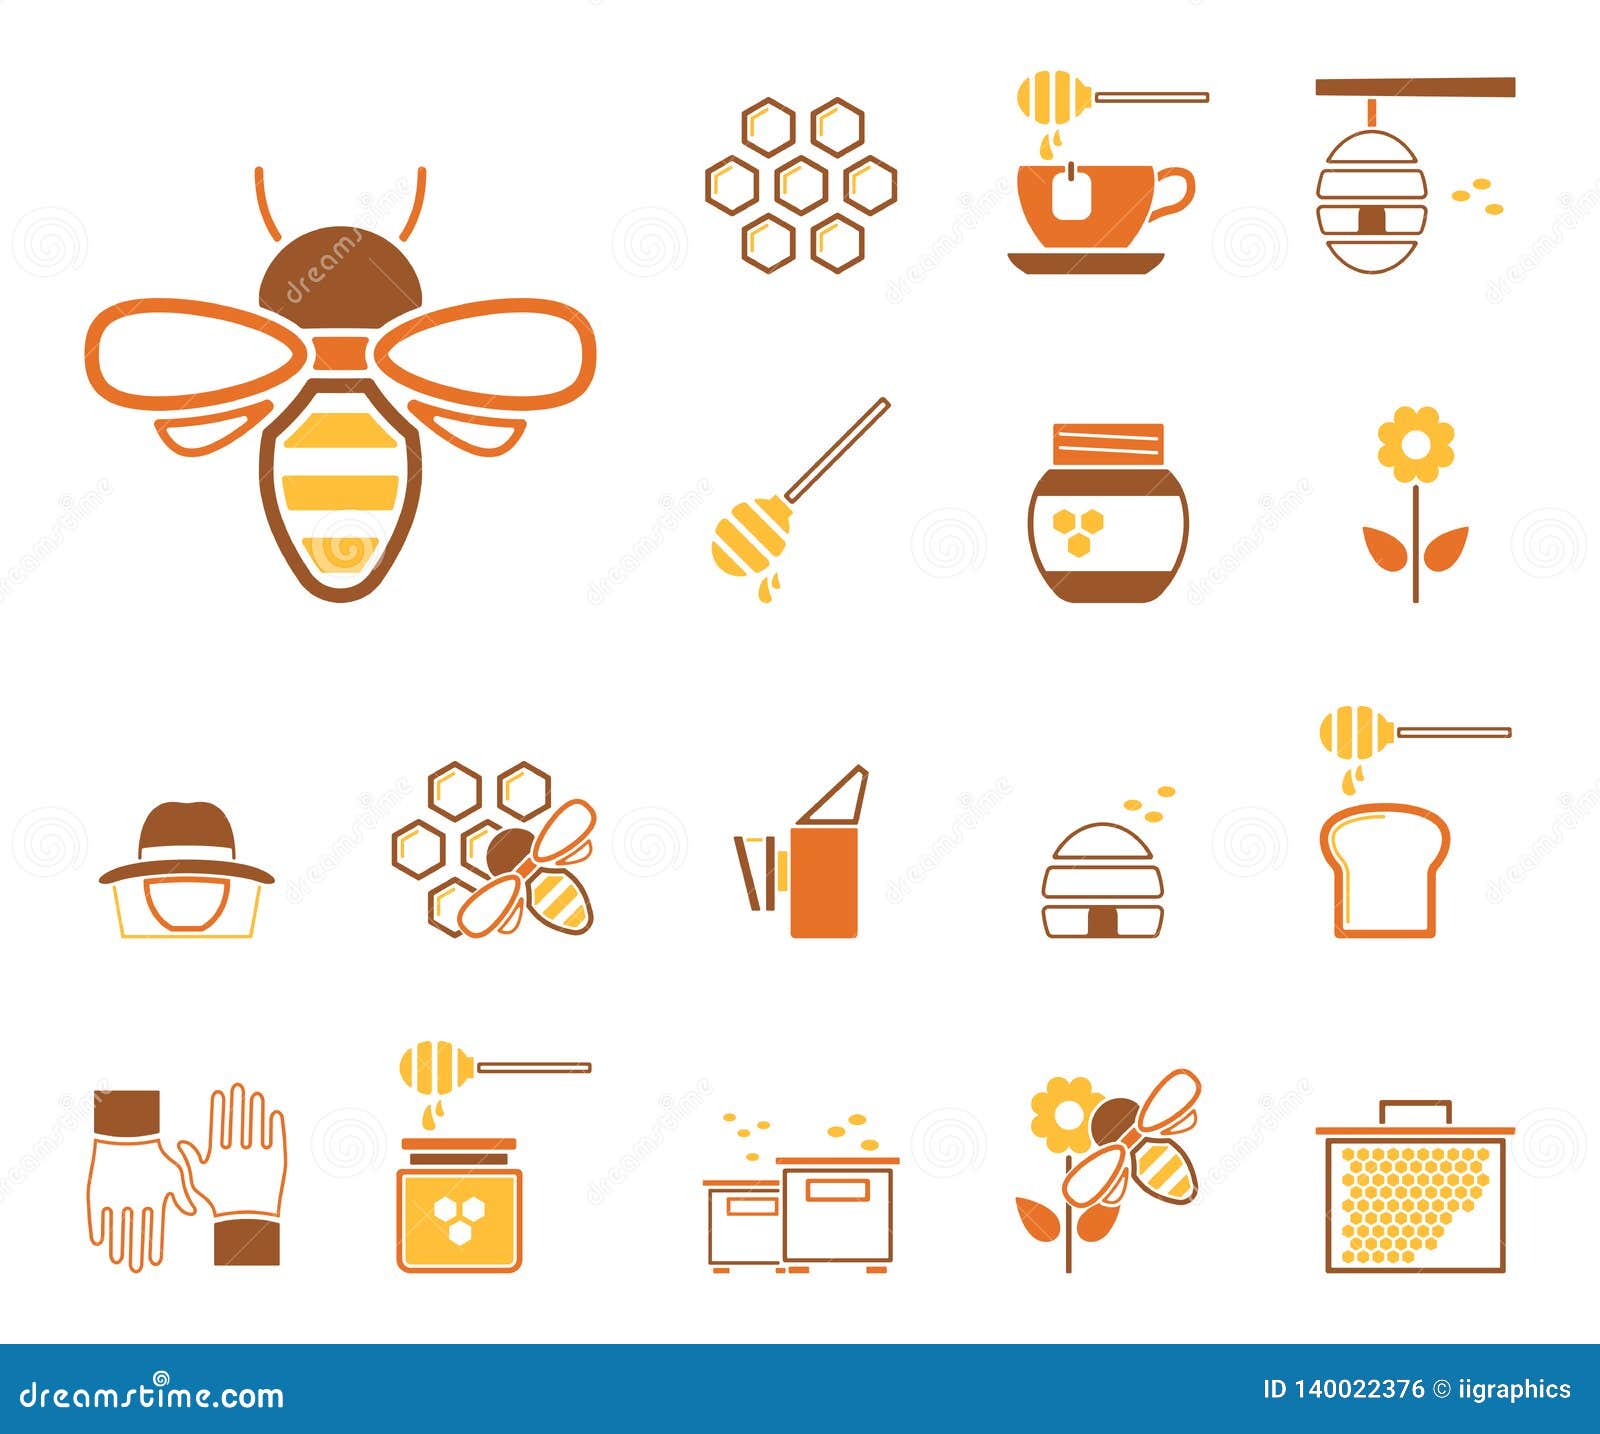 bees & honey - iconset - icons